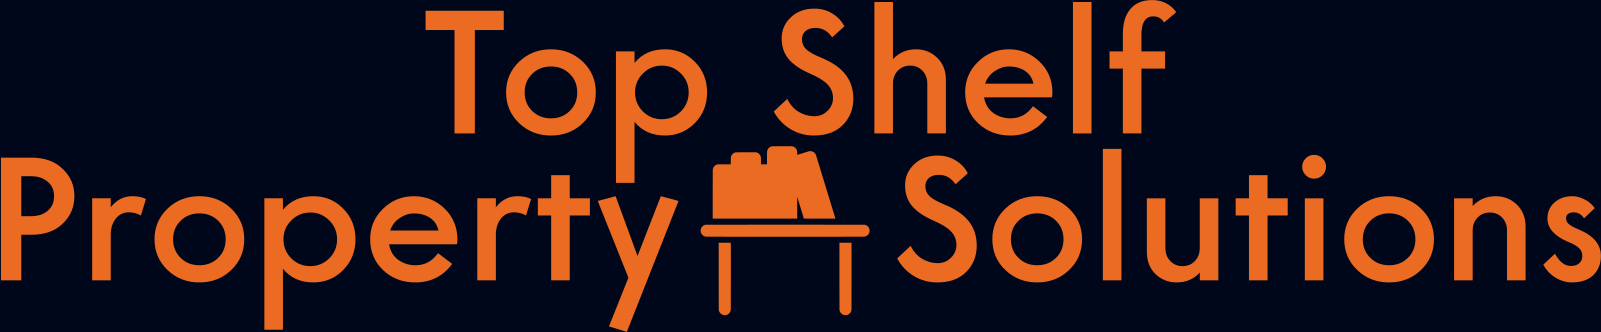 Top Shelf Property Solutions LLC Logo